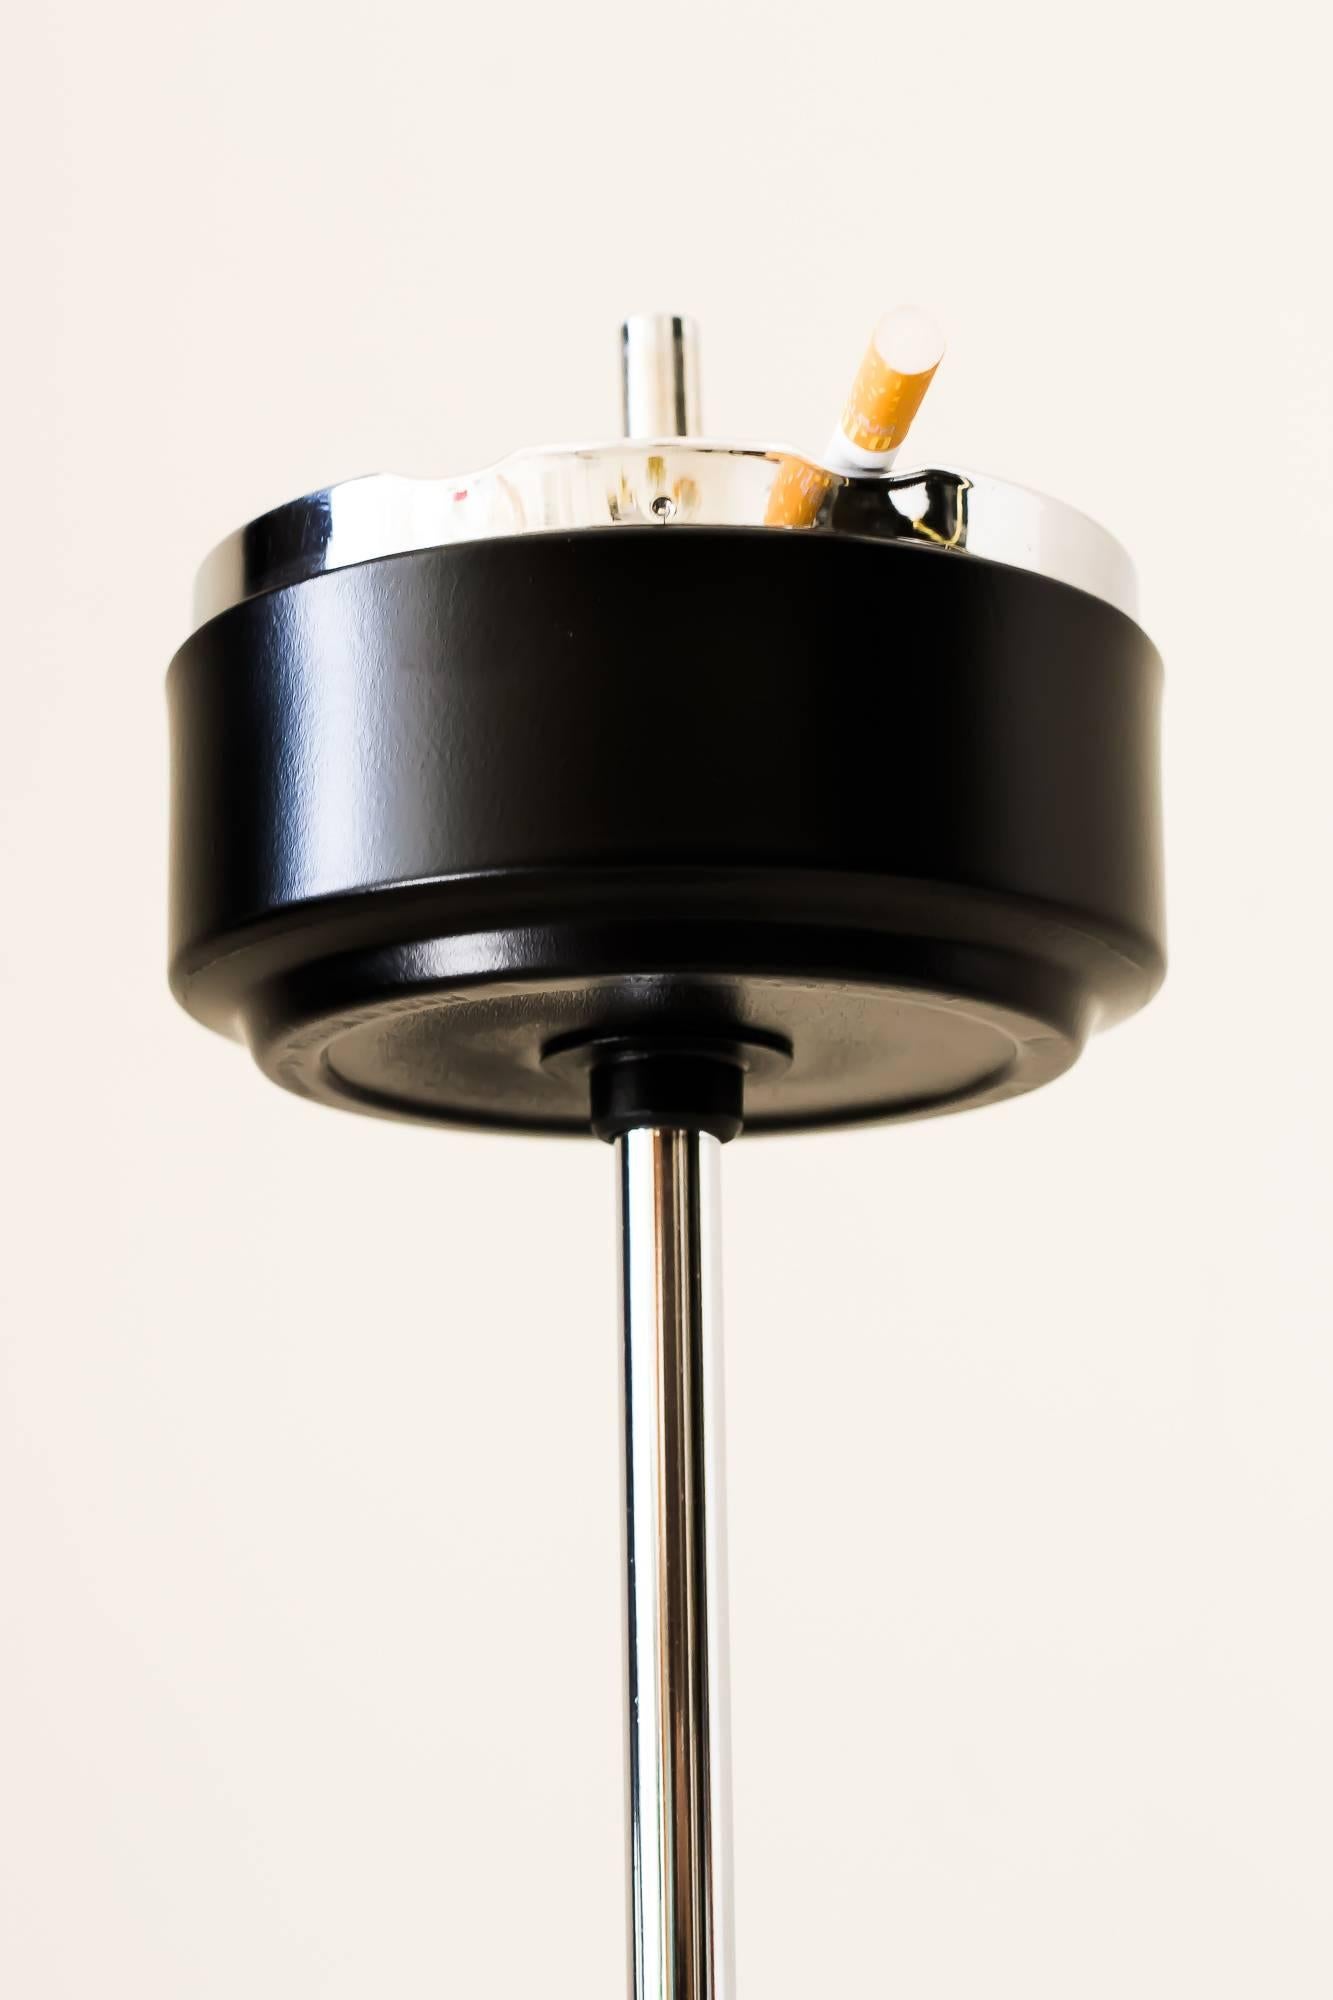 1960s ashtray stand